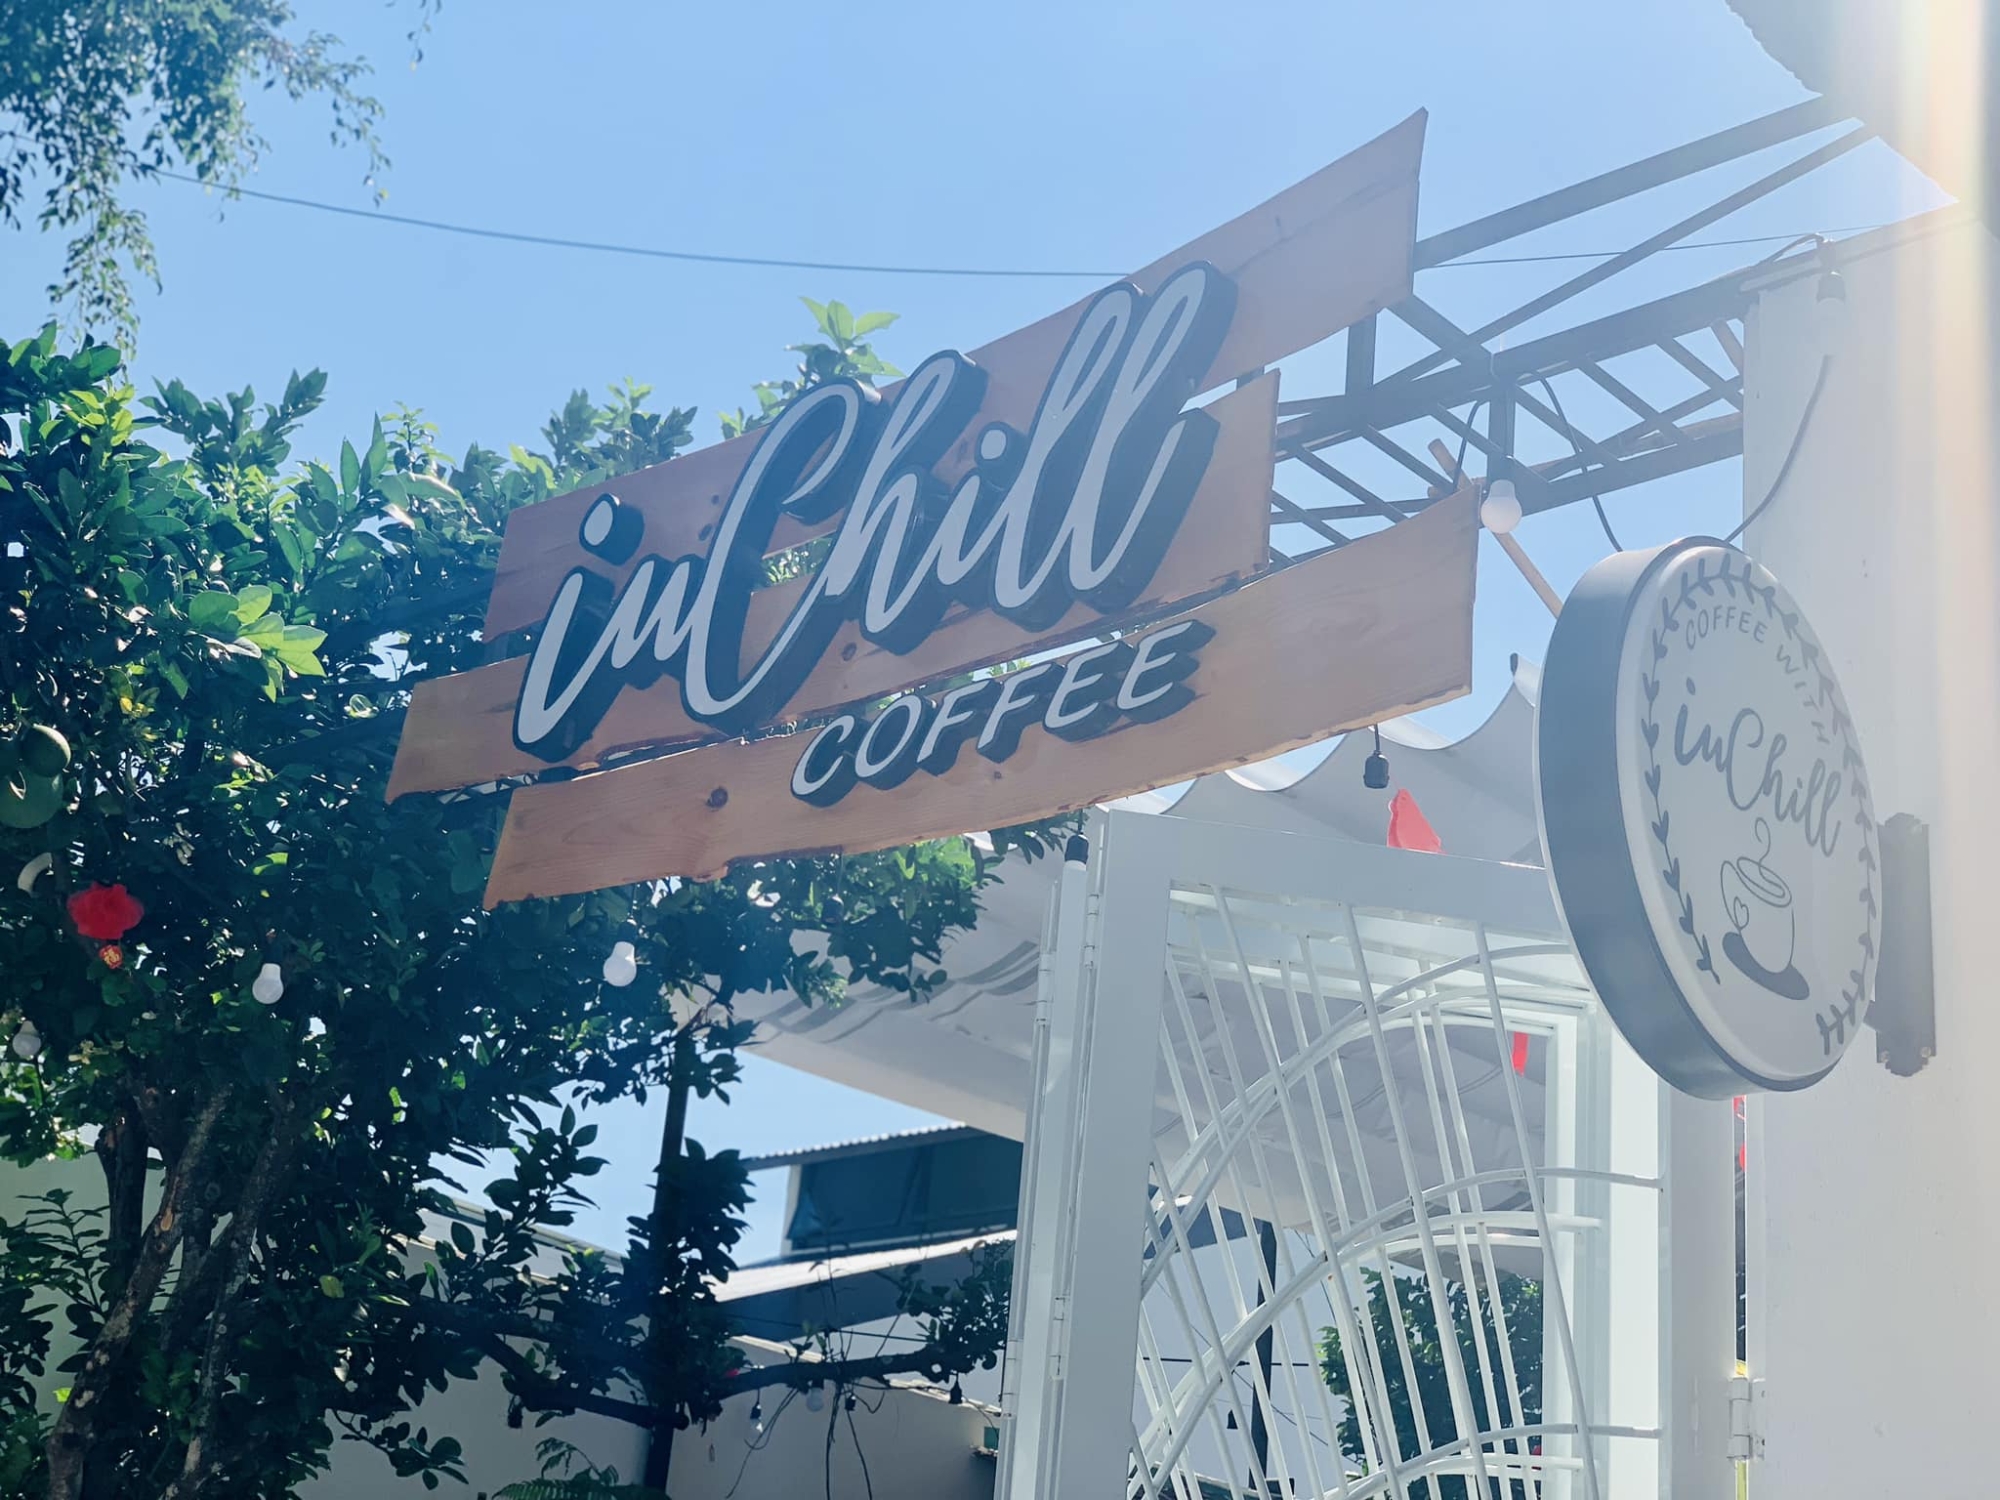 IuChill Coffee